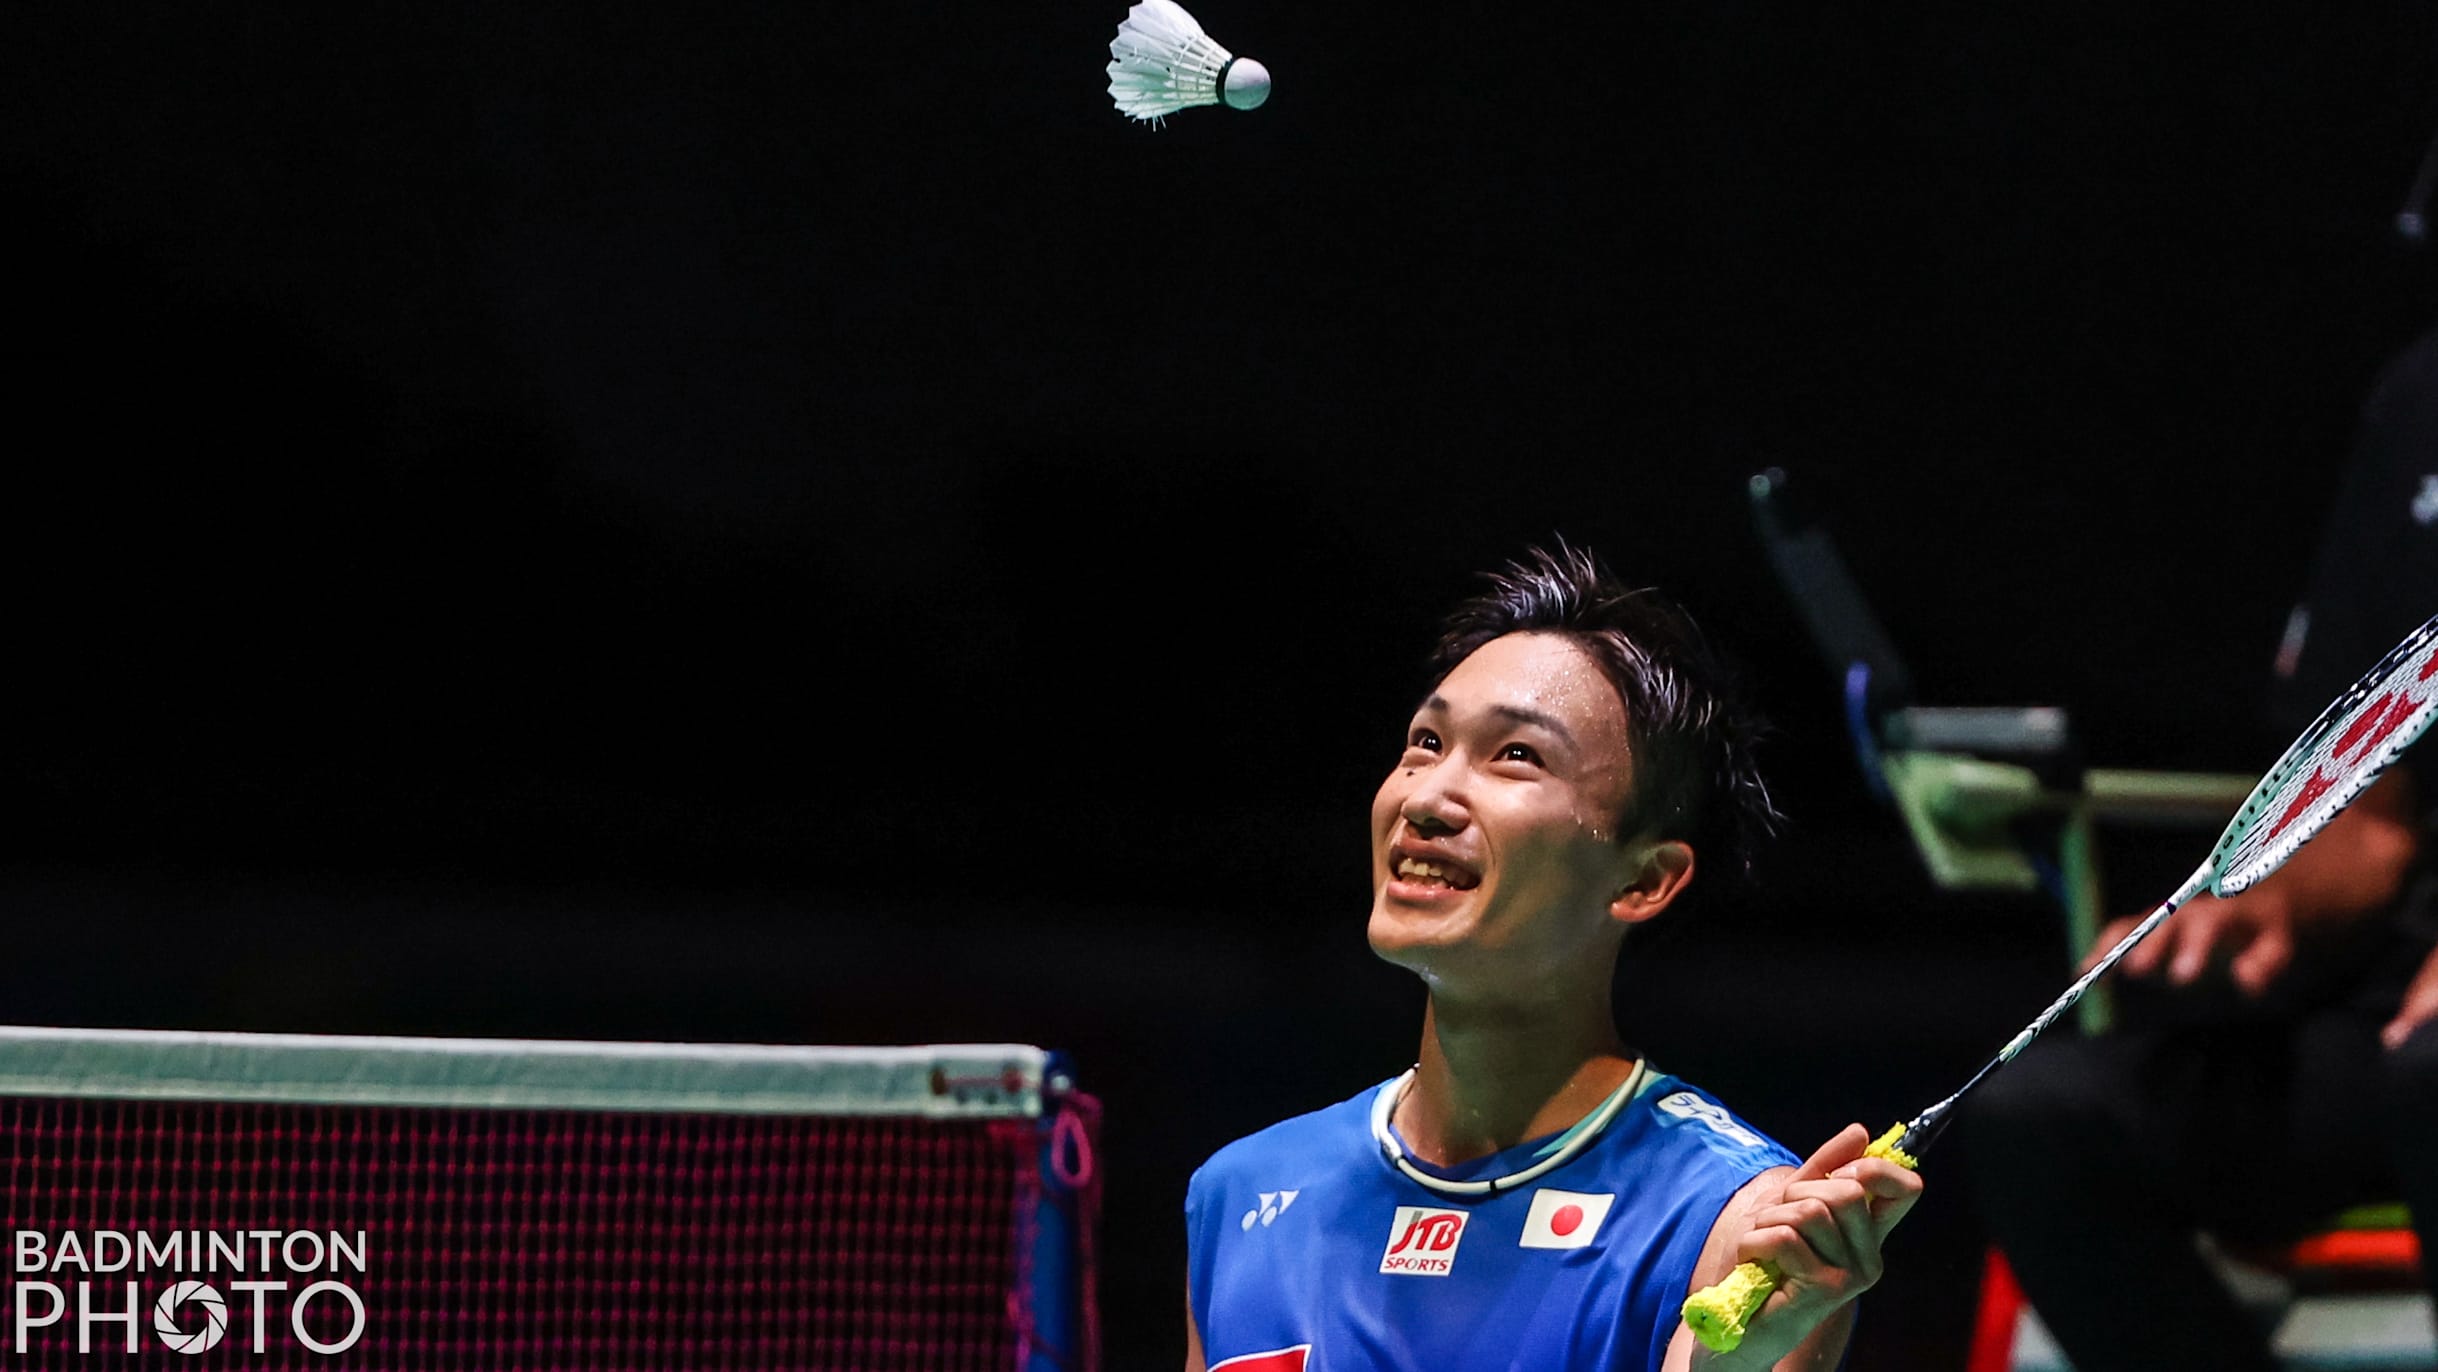 live score badminton world championship 2022